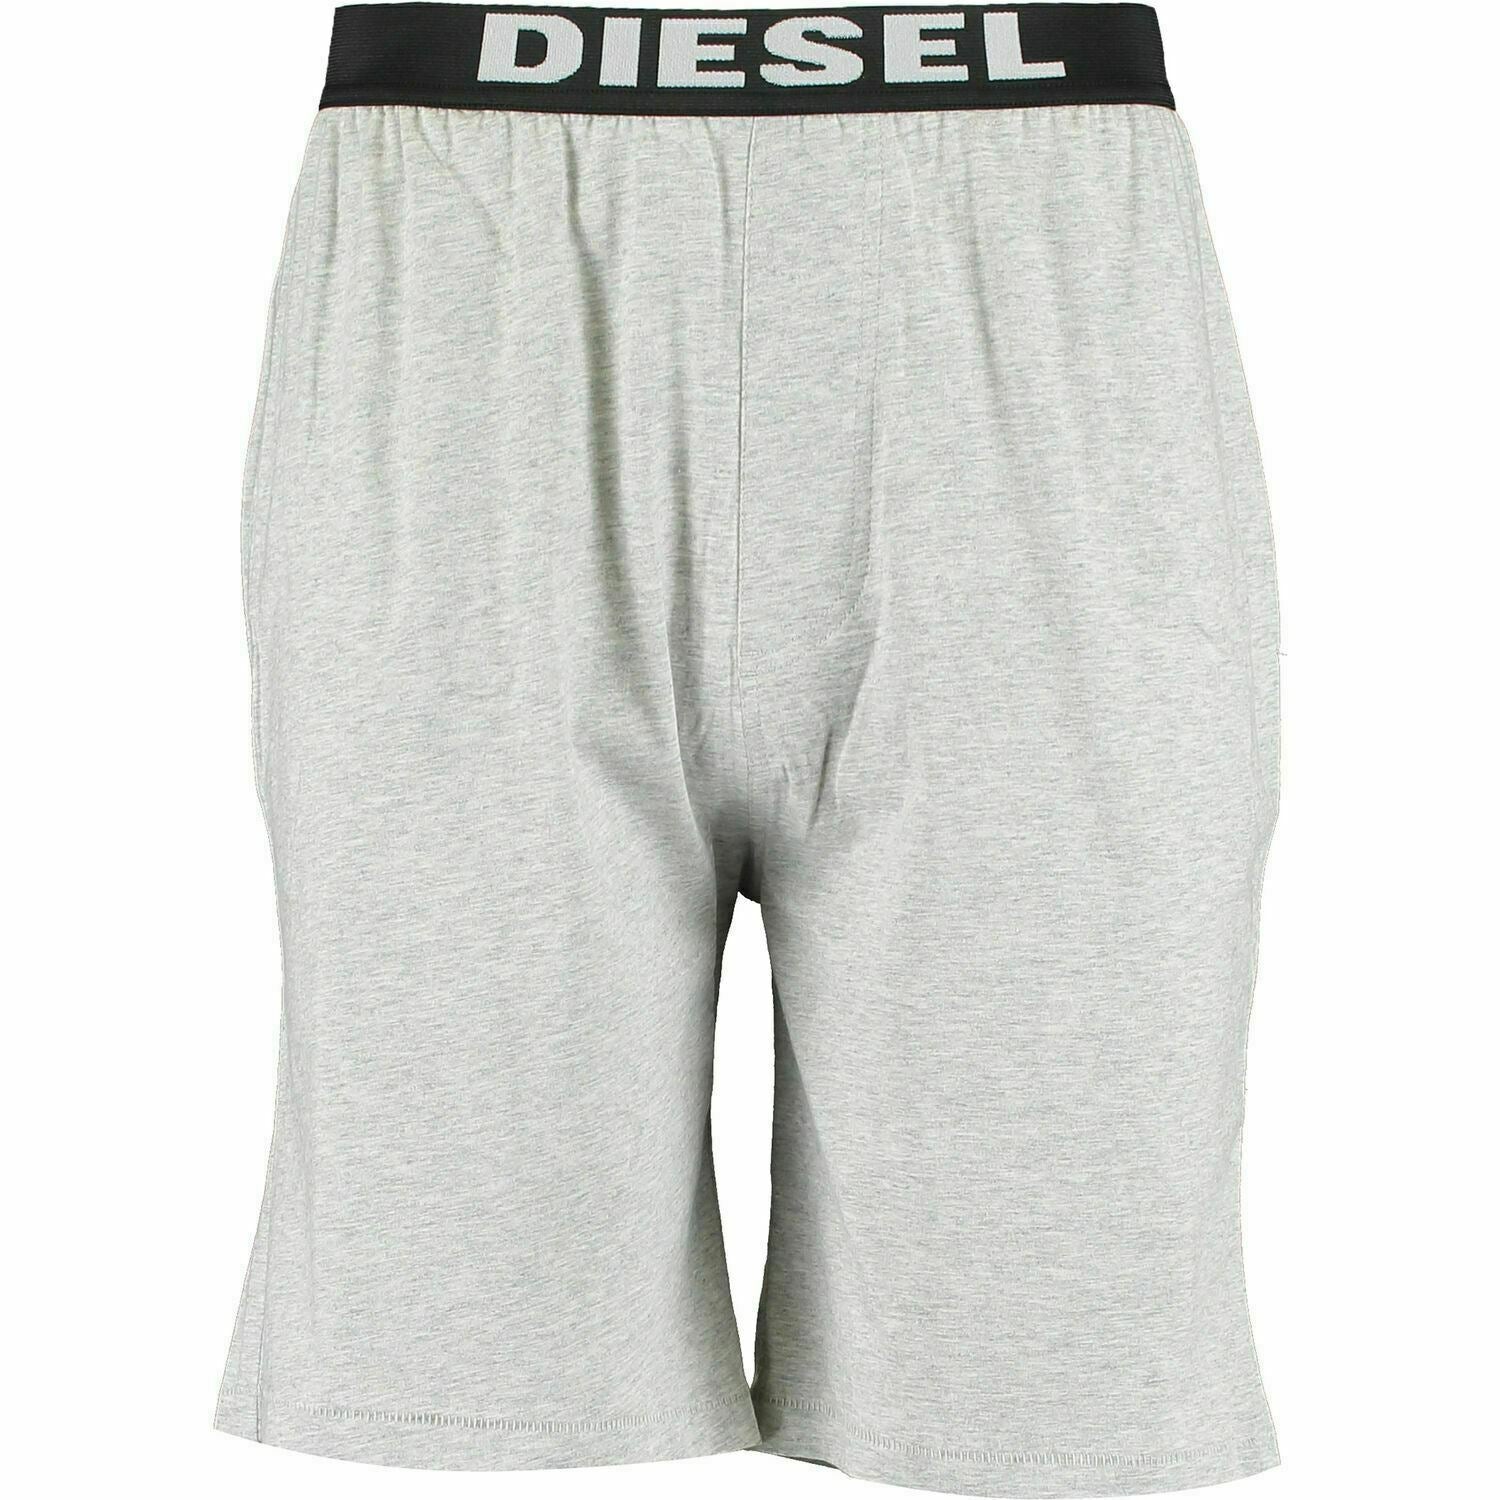 DIESEL Men's TOM Lounge Shorts, Light Grey, size SMALL